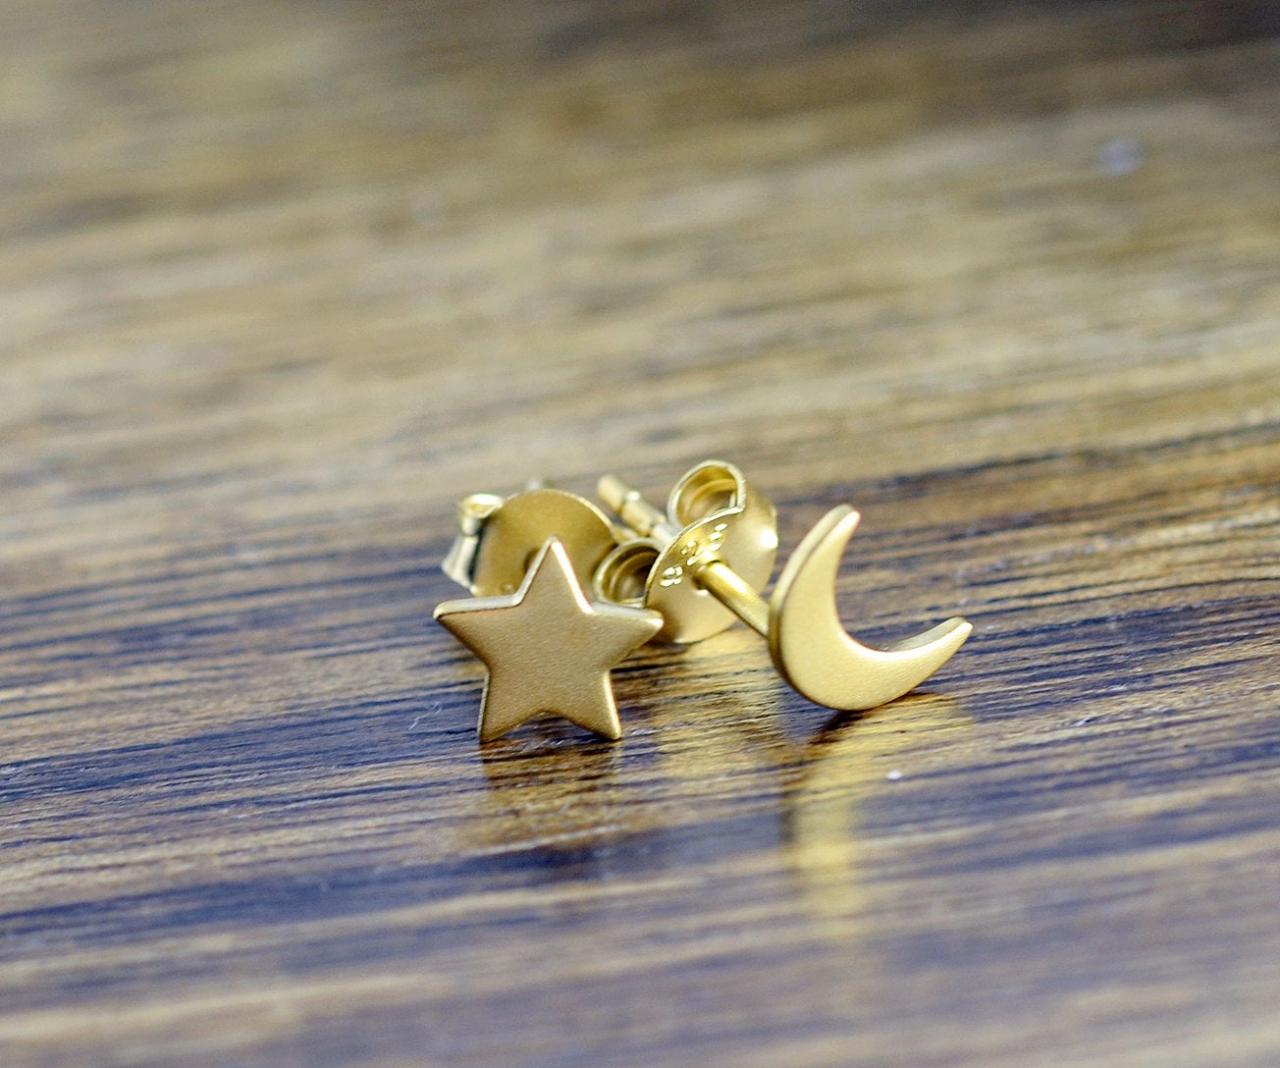 Gold Star And Moon Earrings - Stud Earrings - Celestial Star And Moon Earrings - Tiny Stud Earrings